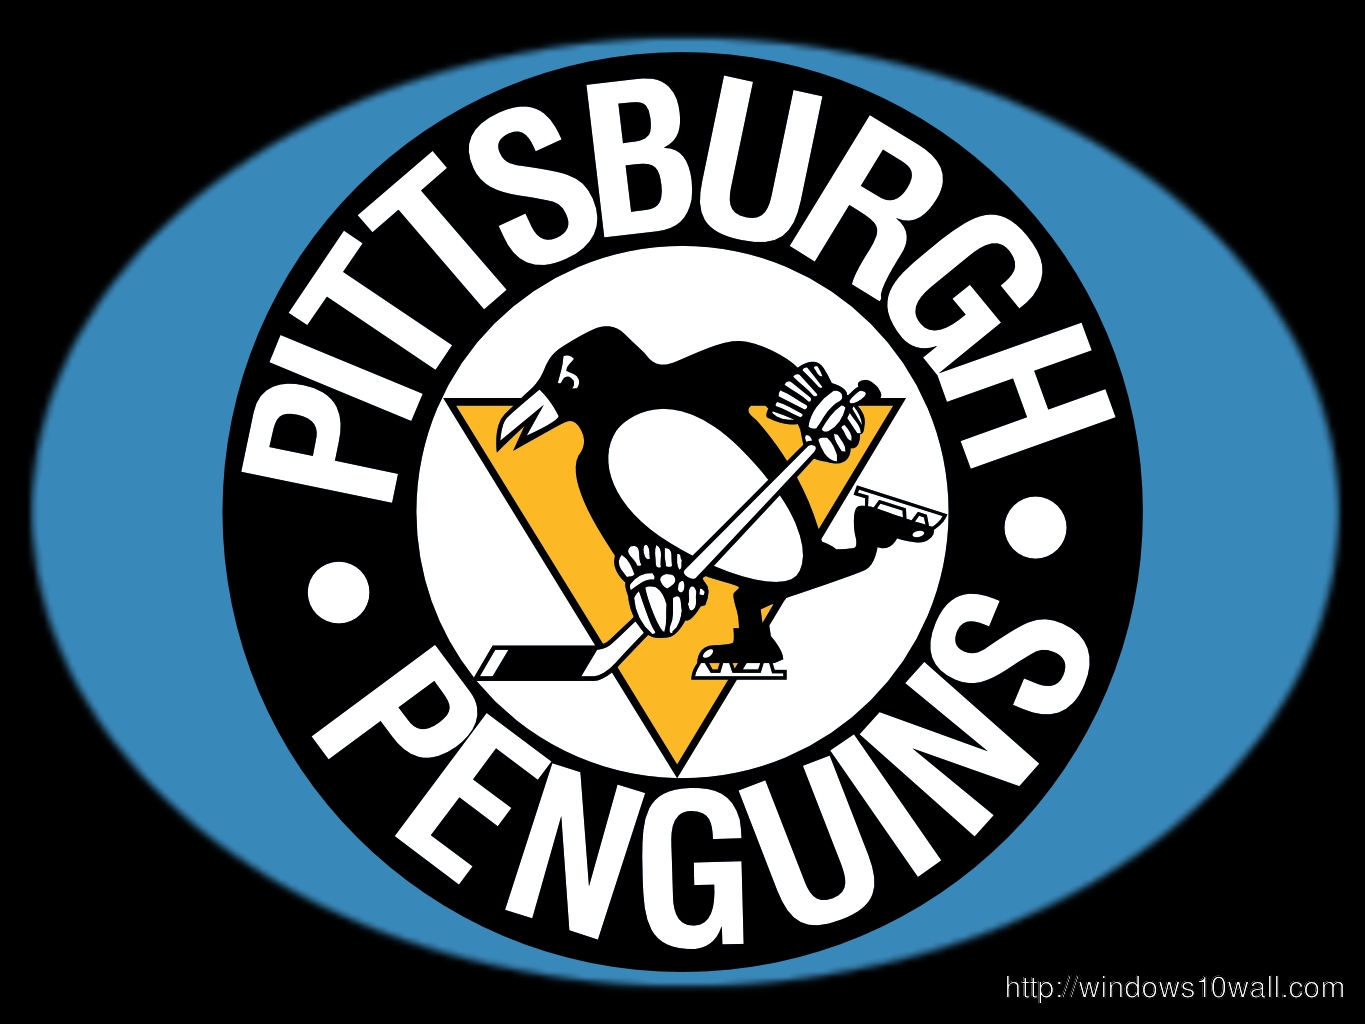 Pittsburgh Penguins Wallpaper